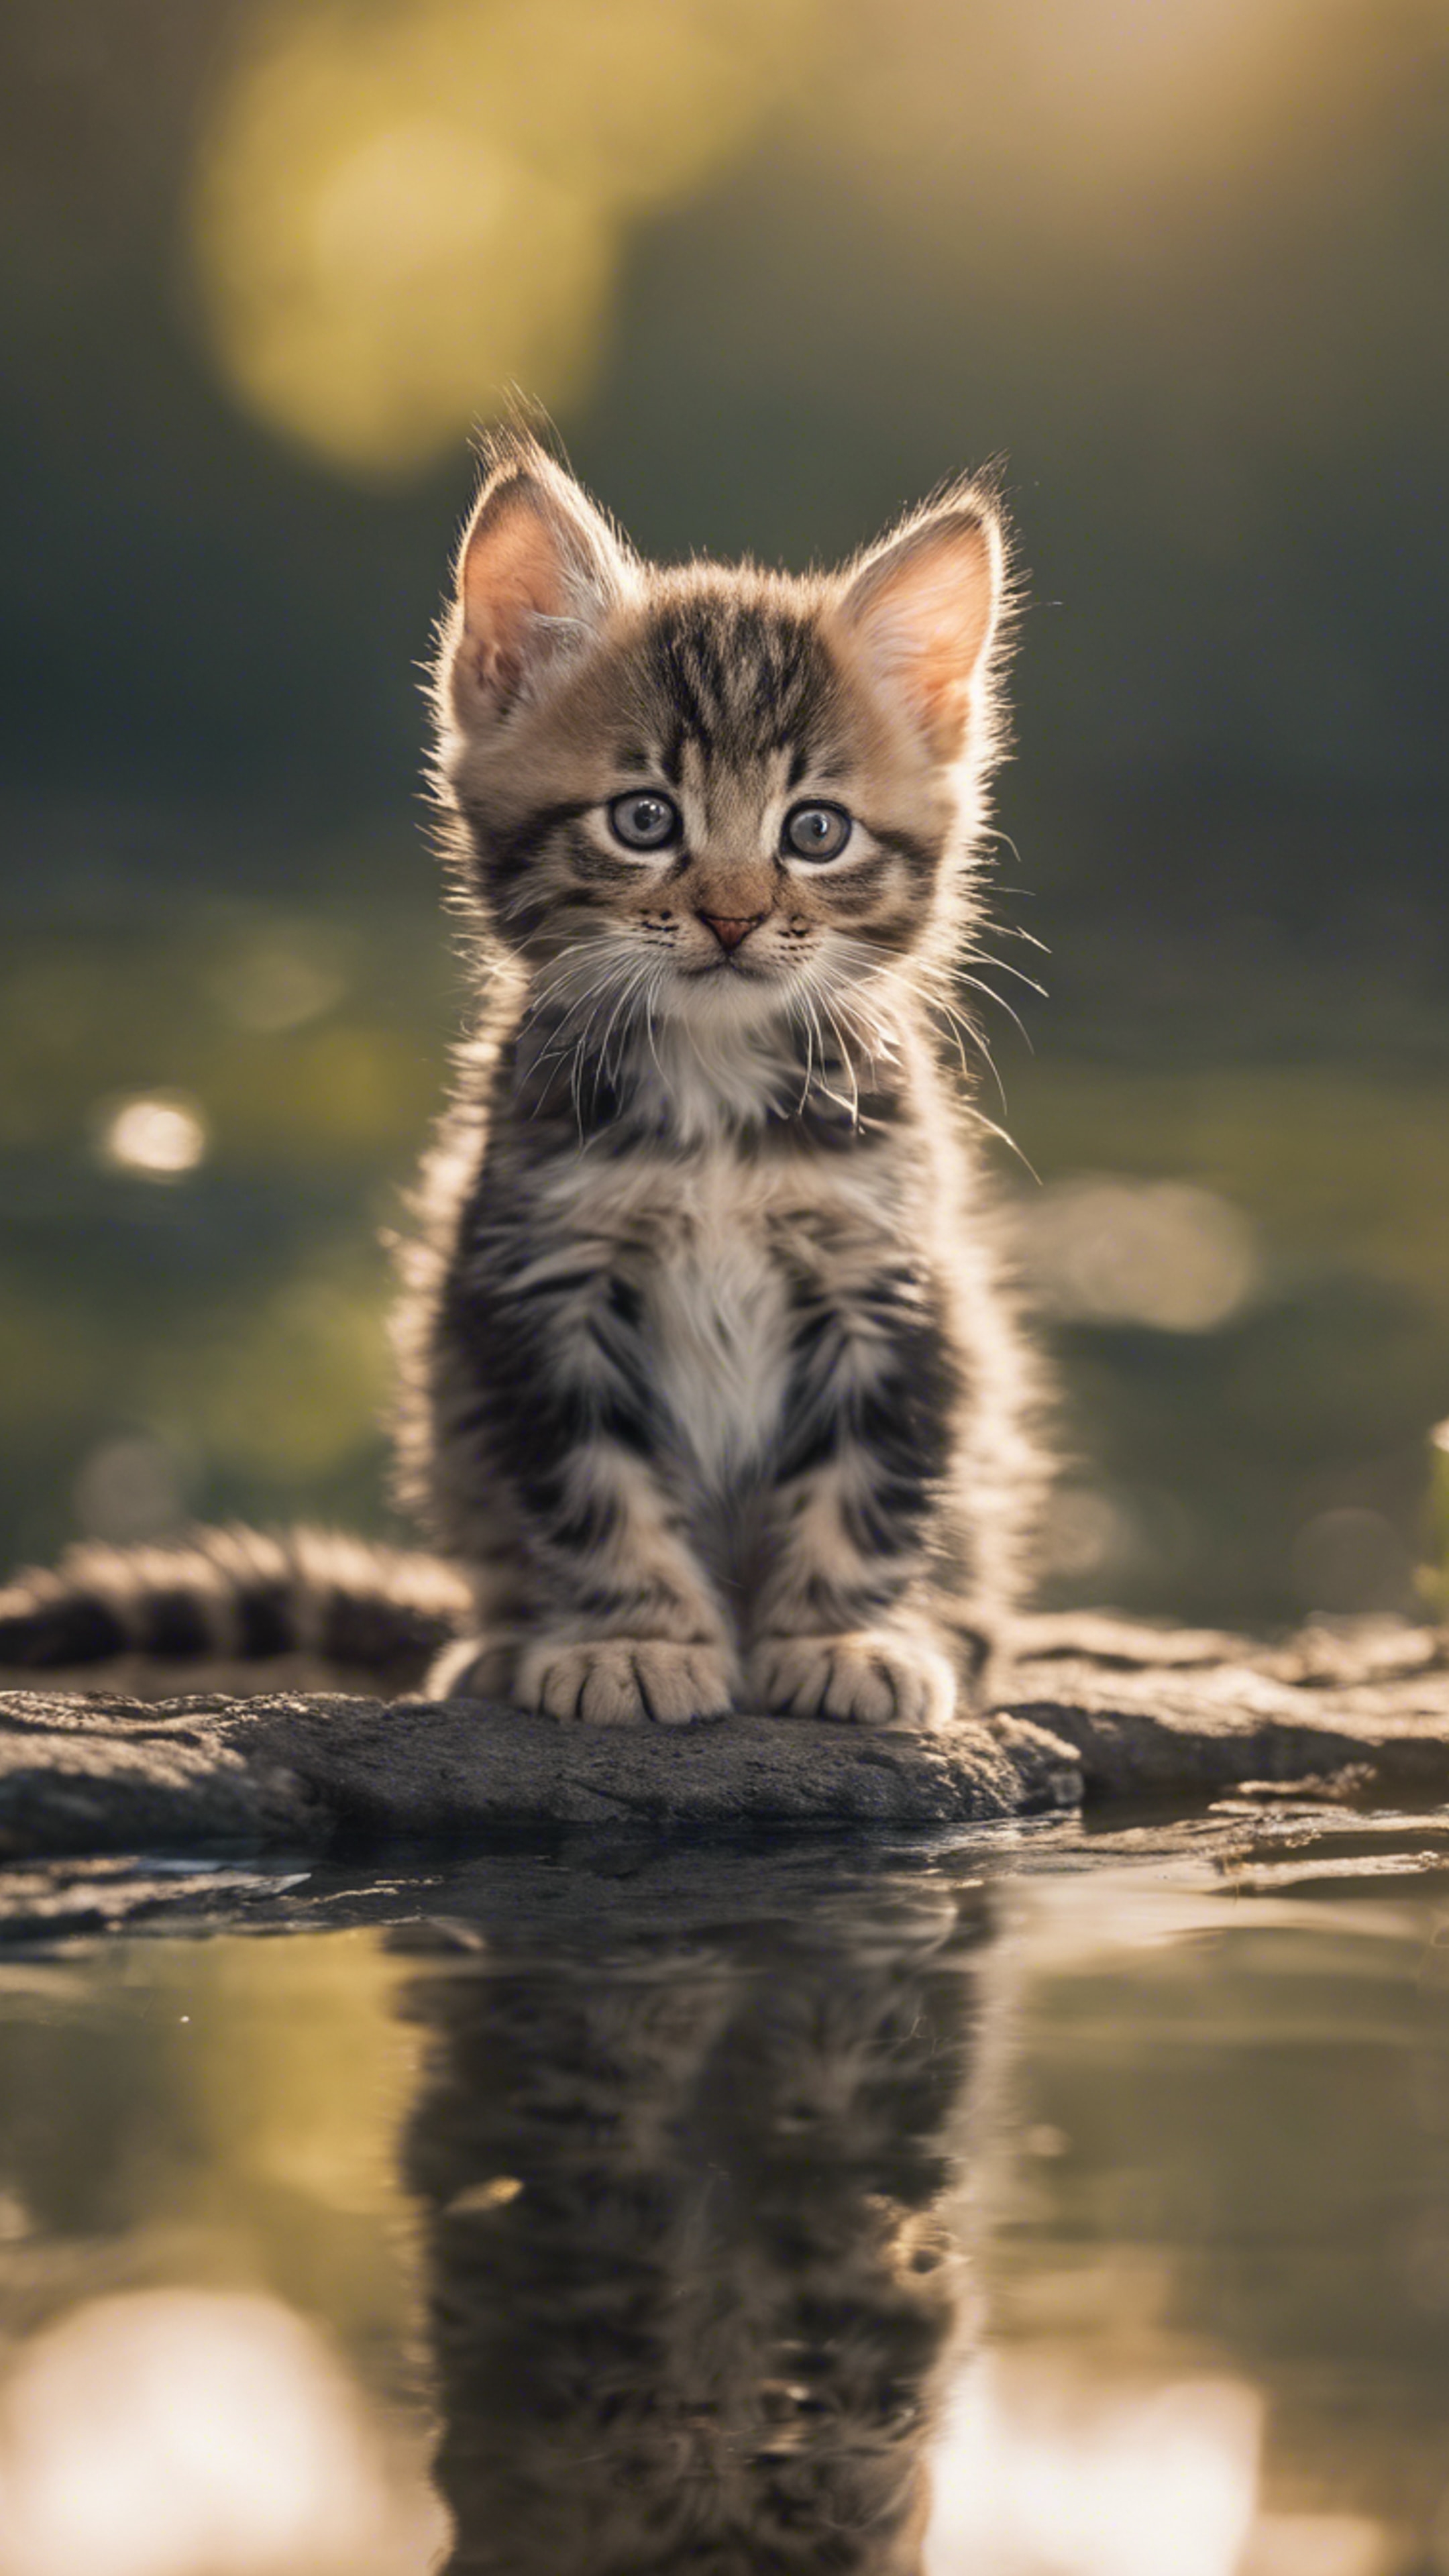 An American Bobtail kitten gazing at its reflection in a clear still pond. Papel de parede[44cb4f7b57f44b00b454]